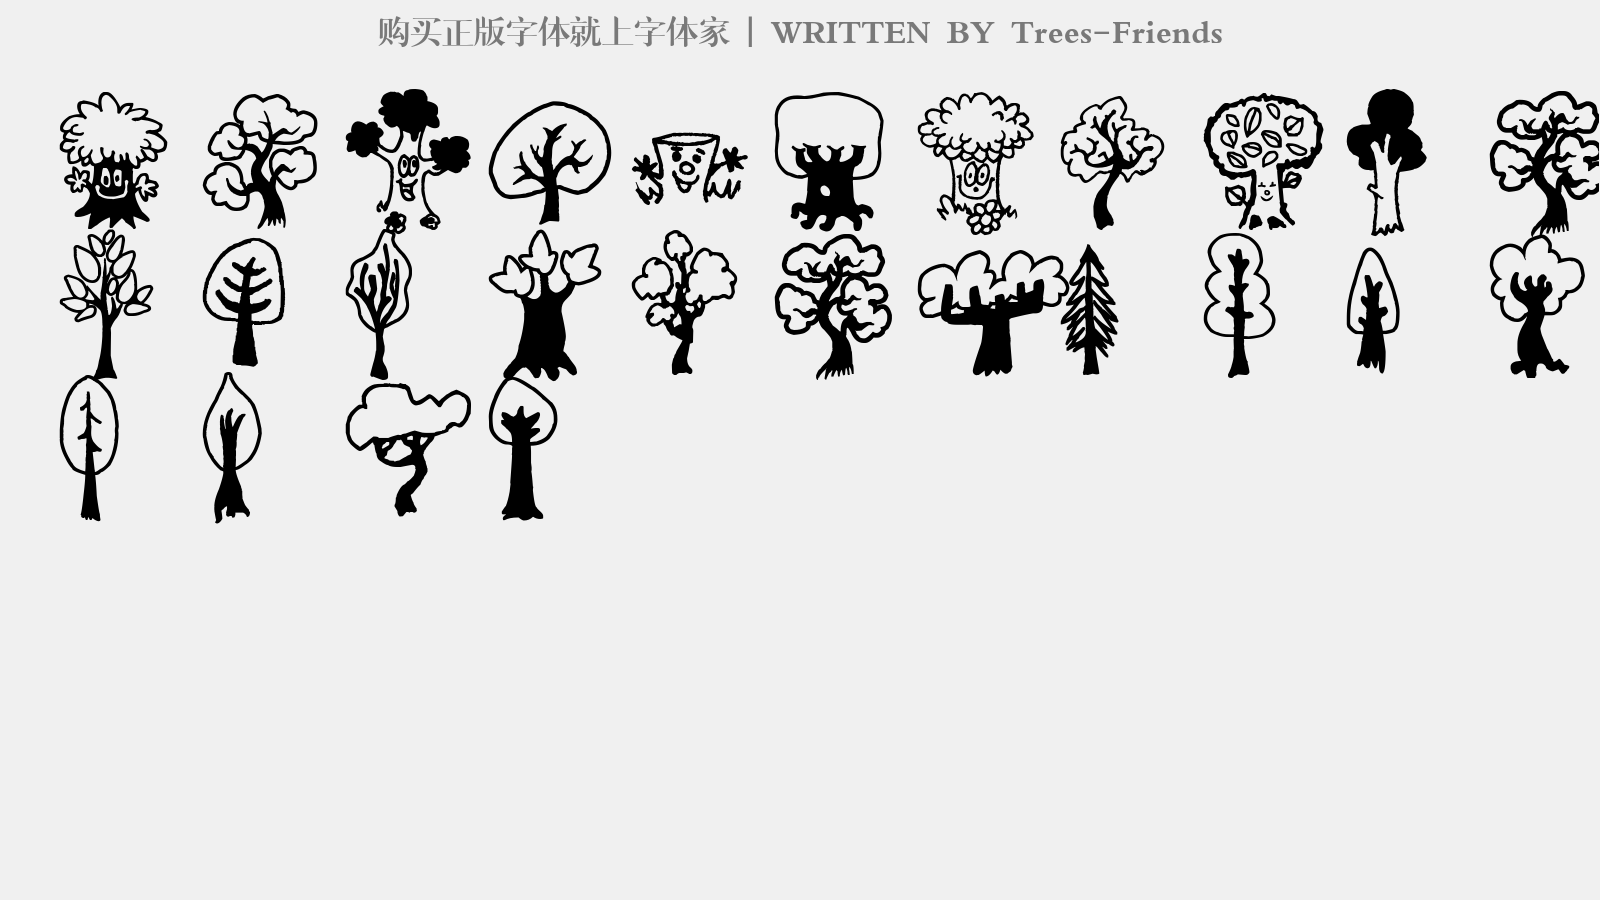 Trees-Friends - 大写字母/小写字母/数字